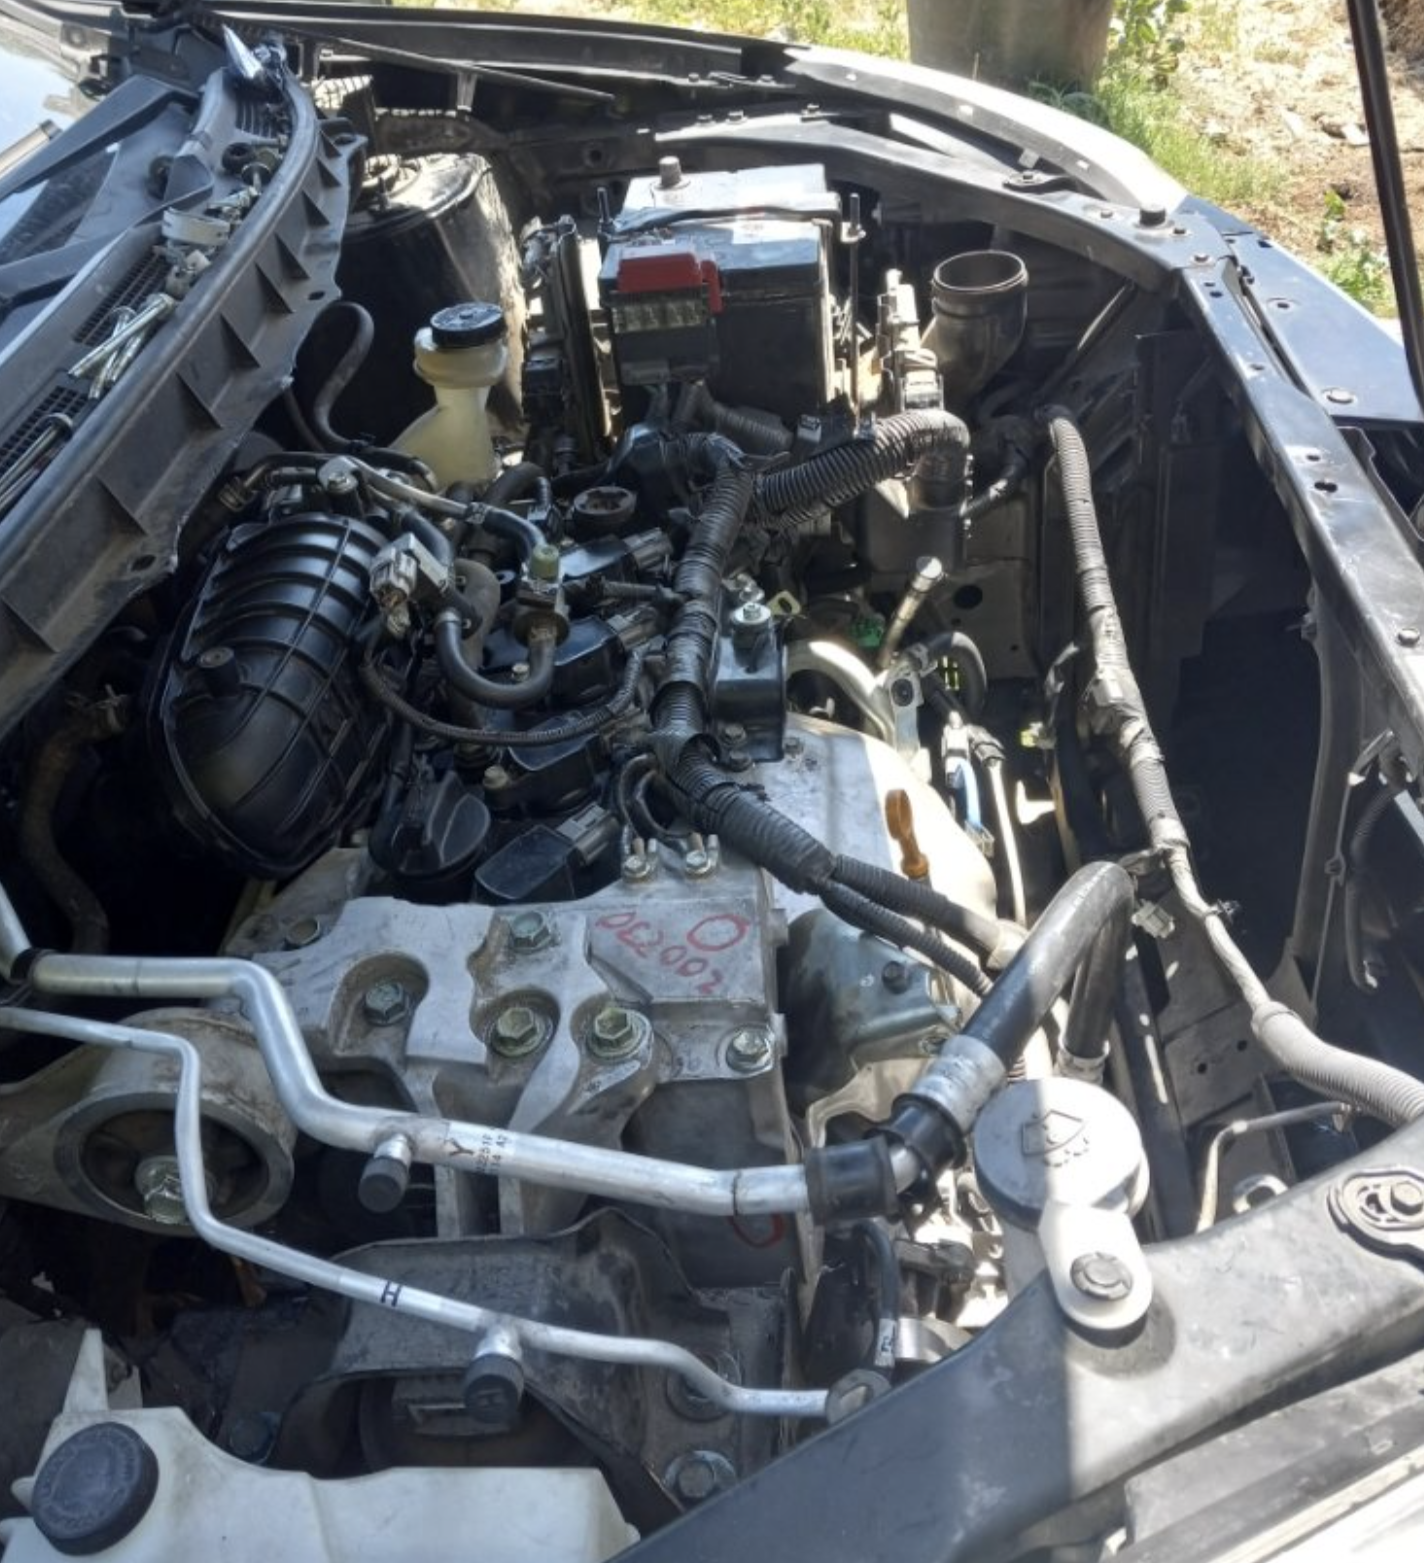 this image shows engine repair in Philadelphia, PA